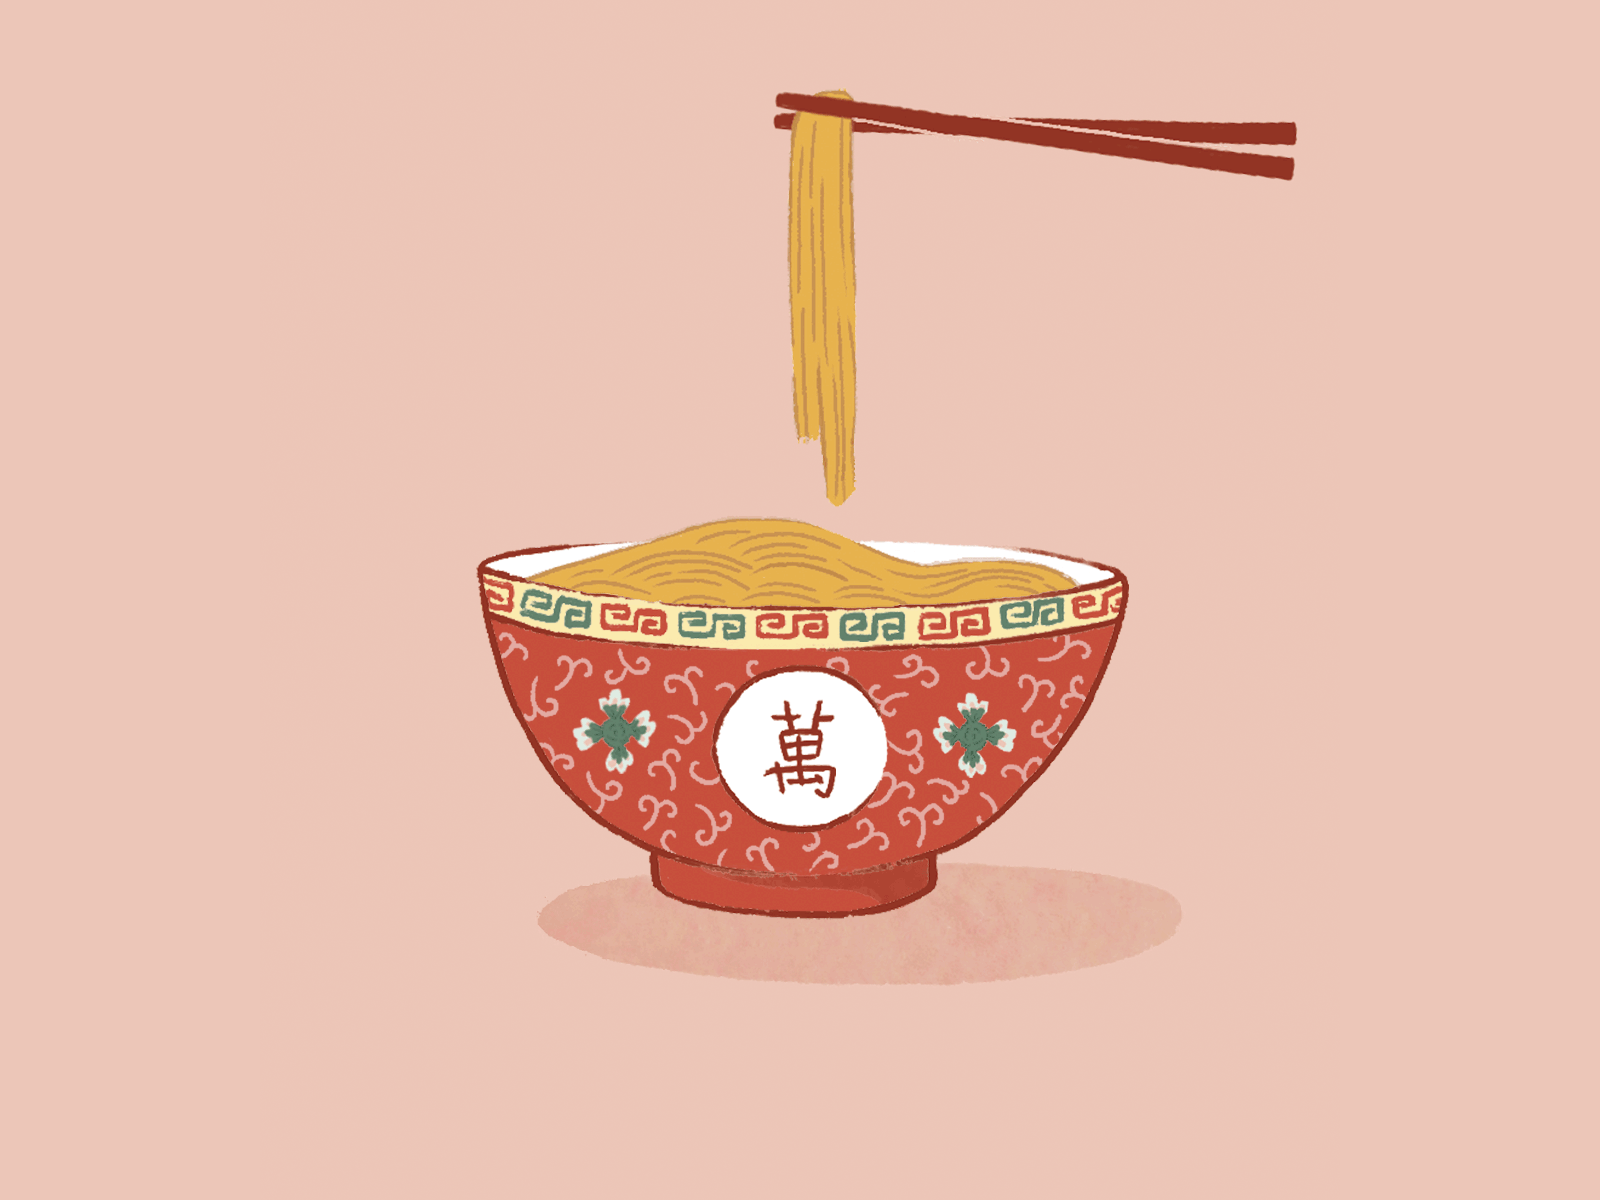 Lunar New Year foods